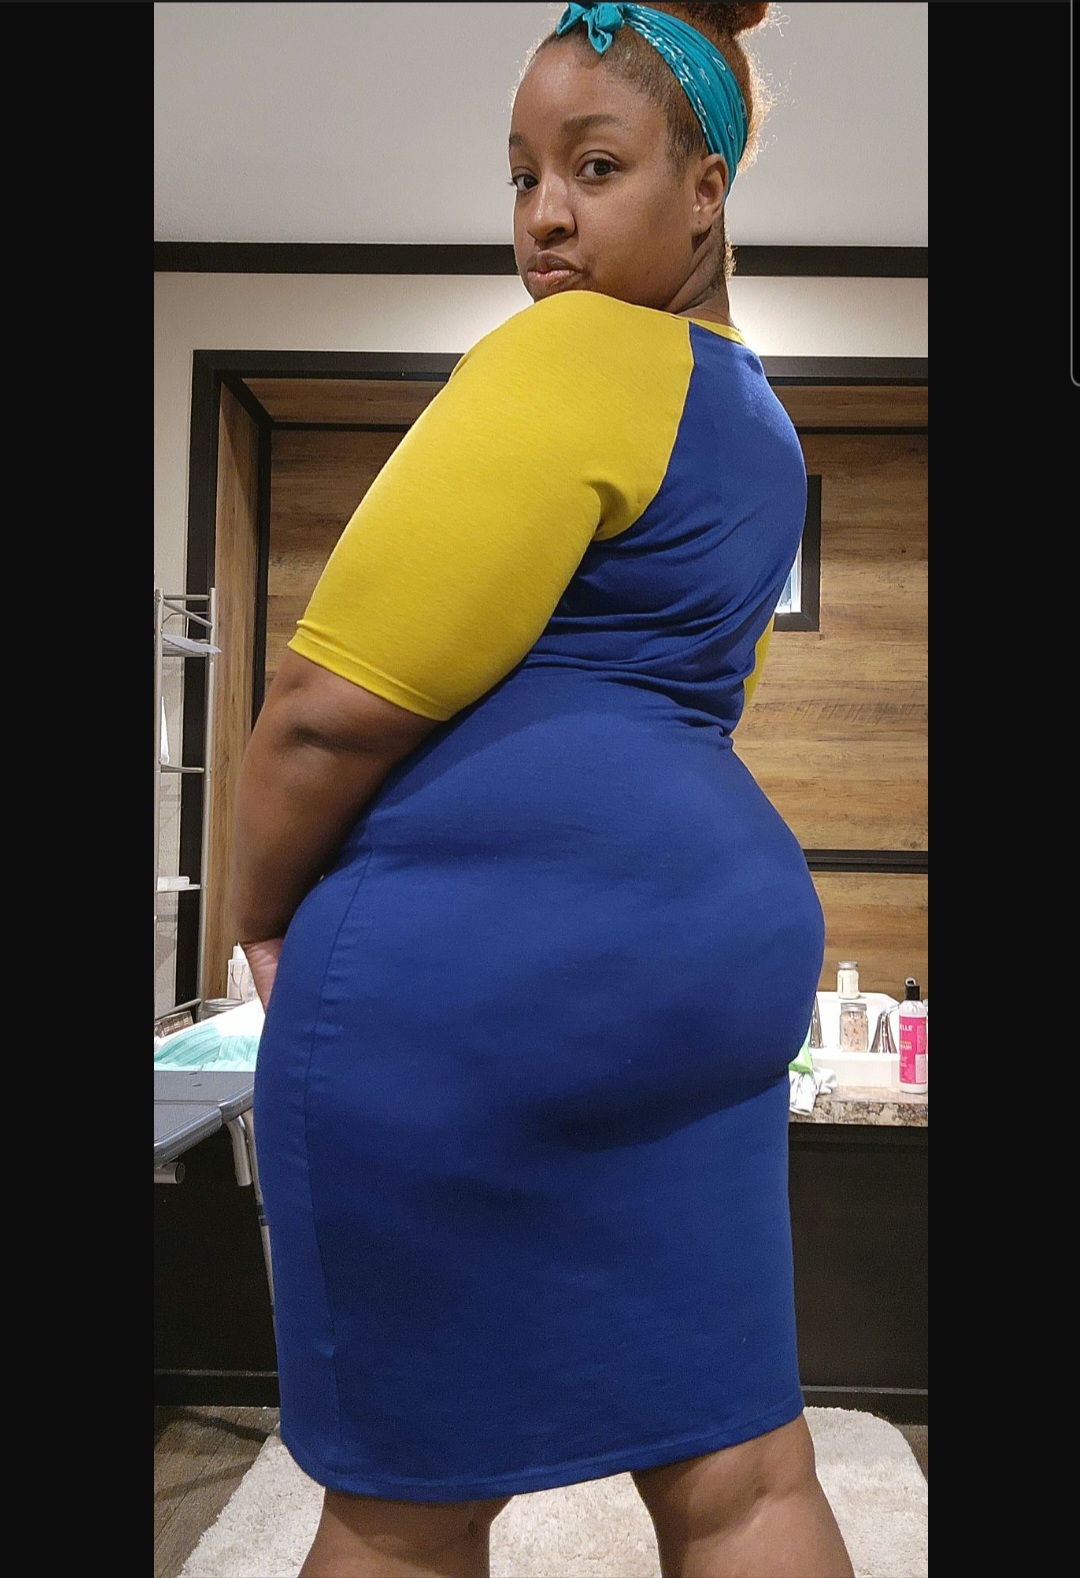 Fat Alabama Slut